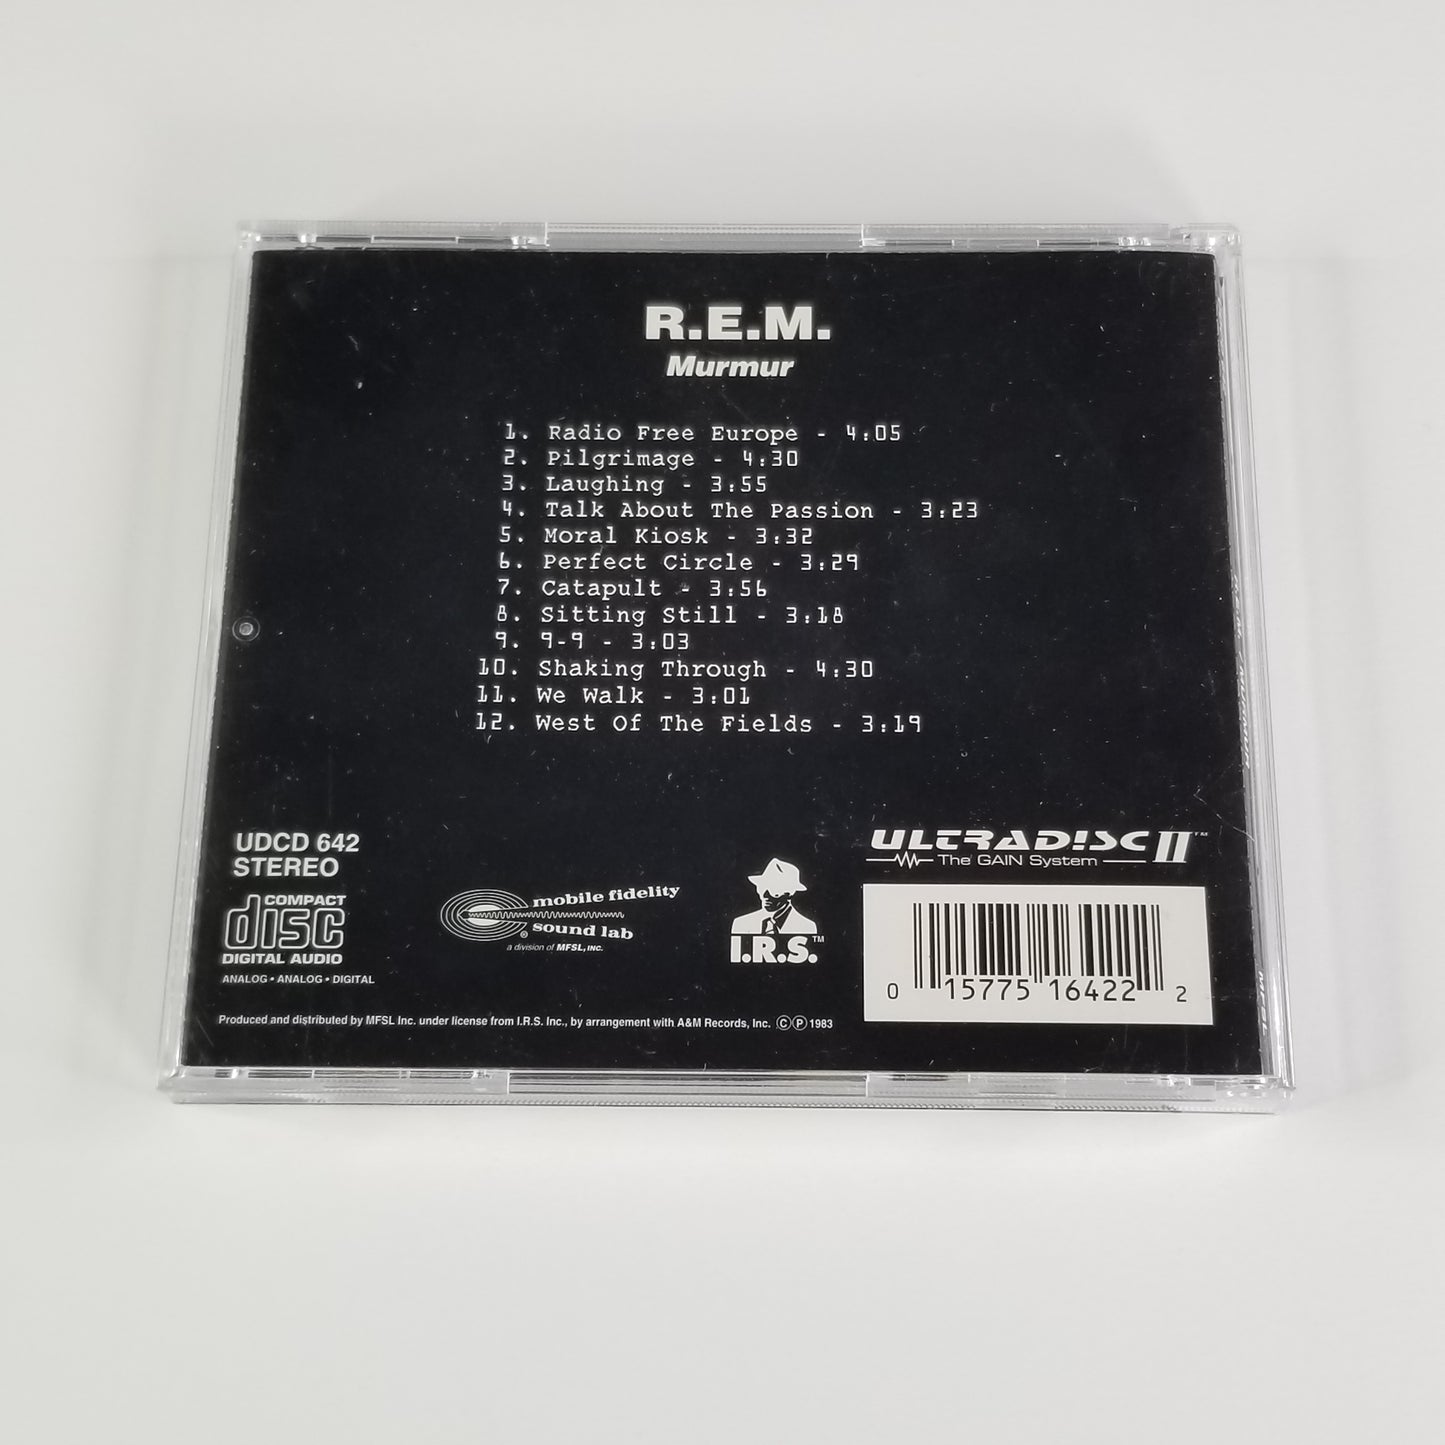 R.E.M. - Murmur MSFL Original Master UDCD 642 and CD 70014